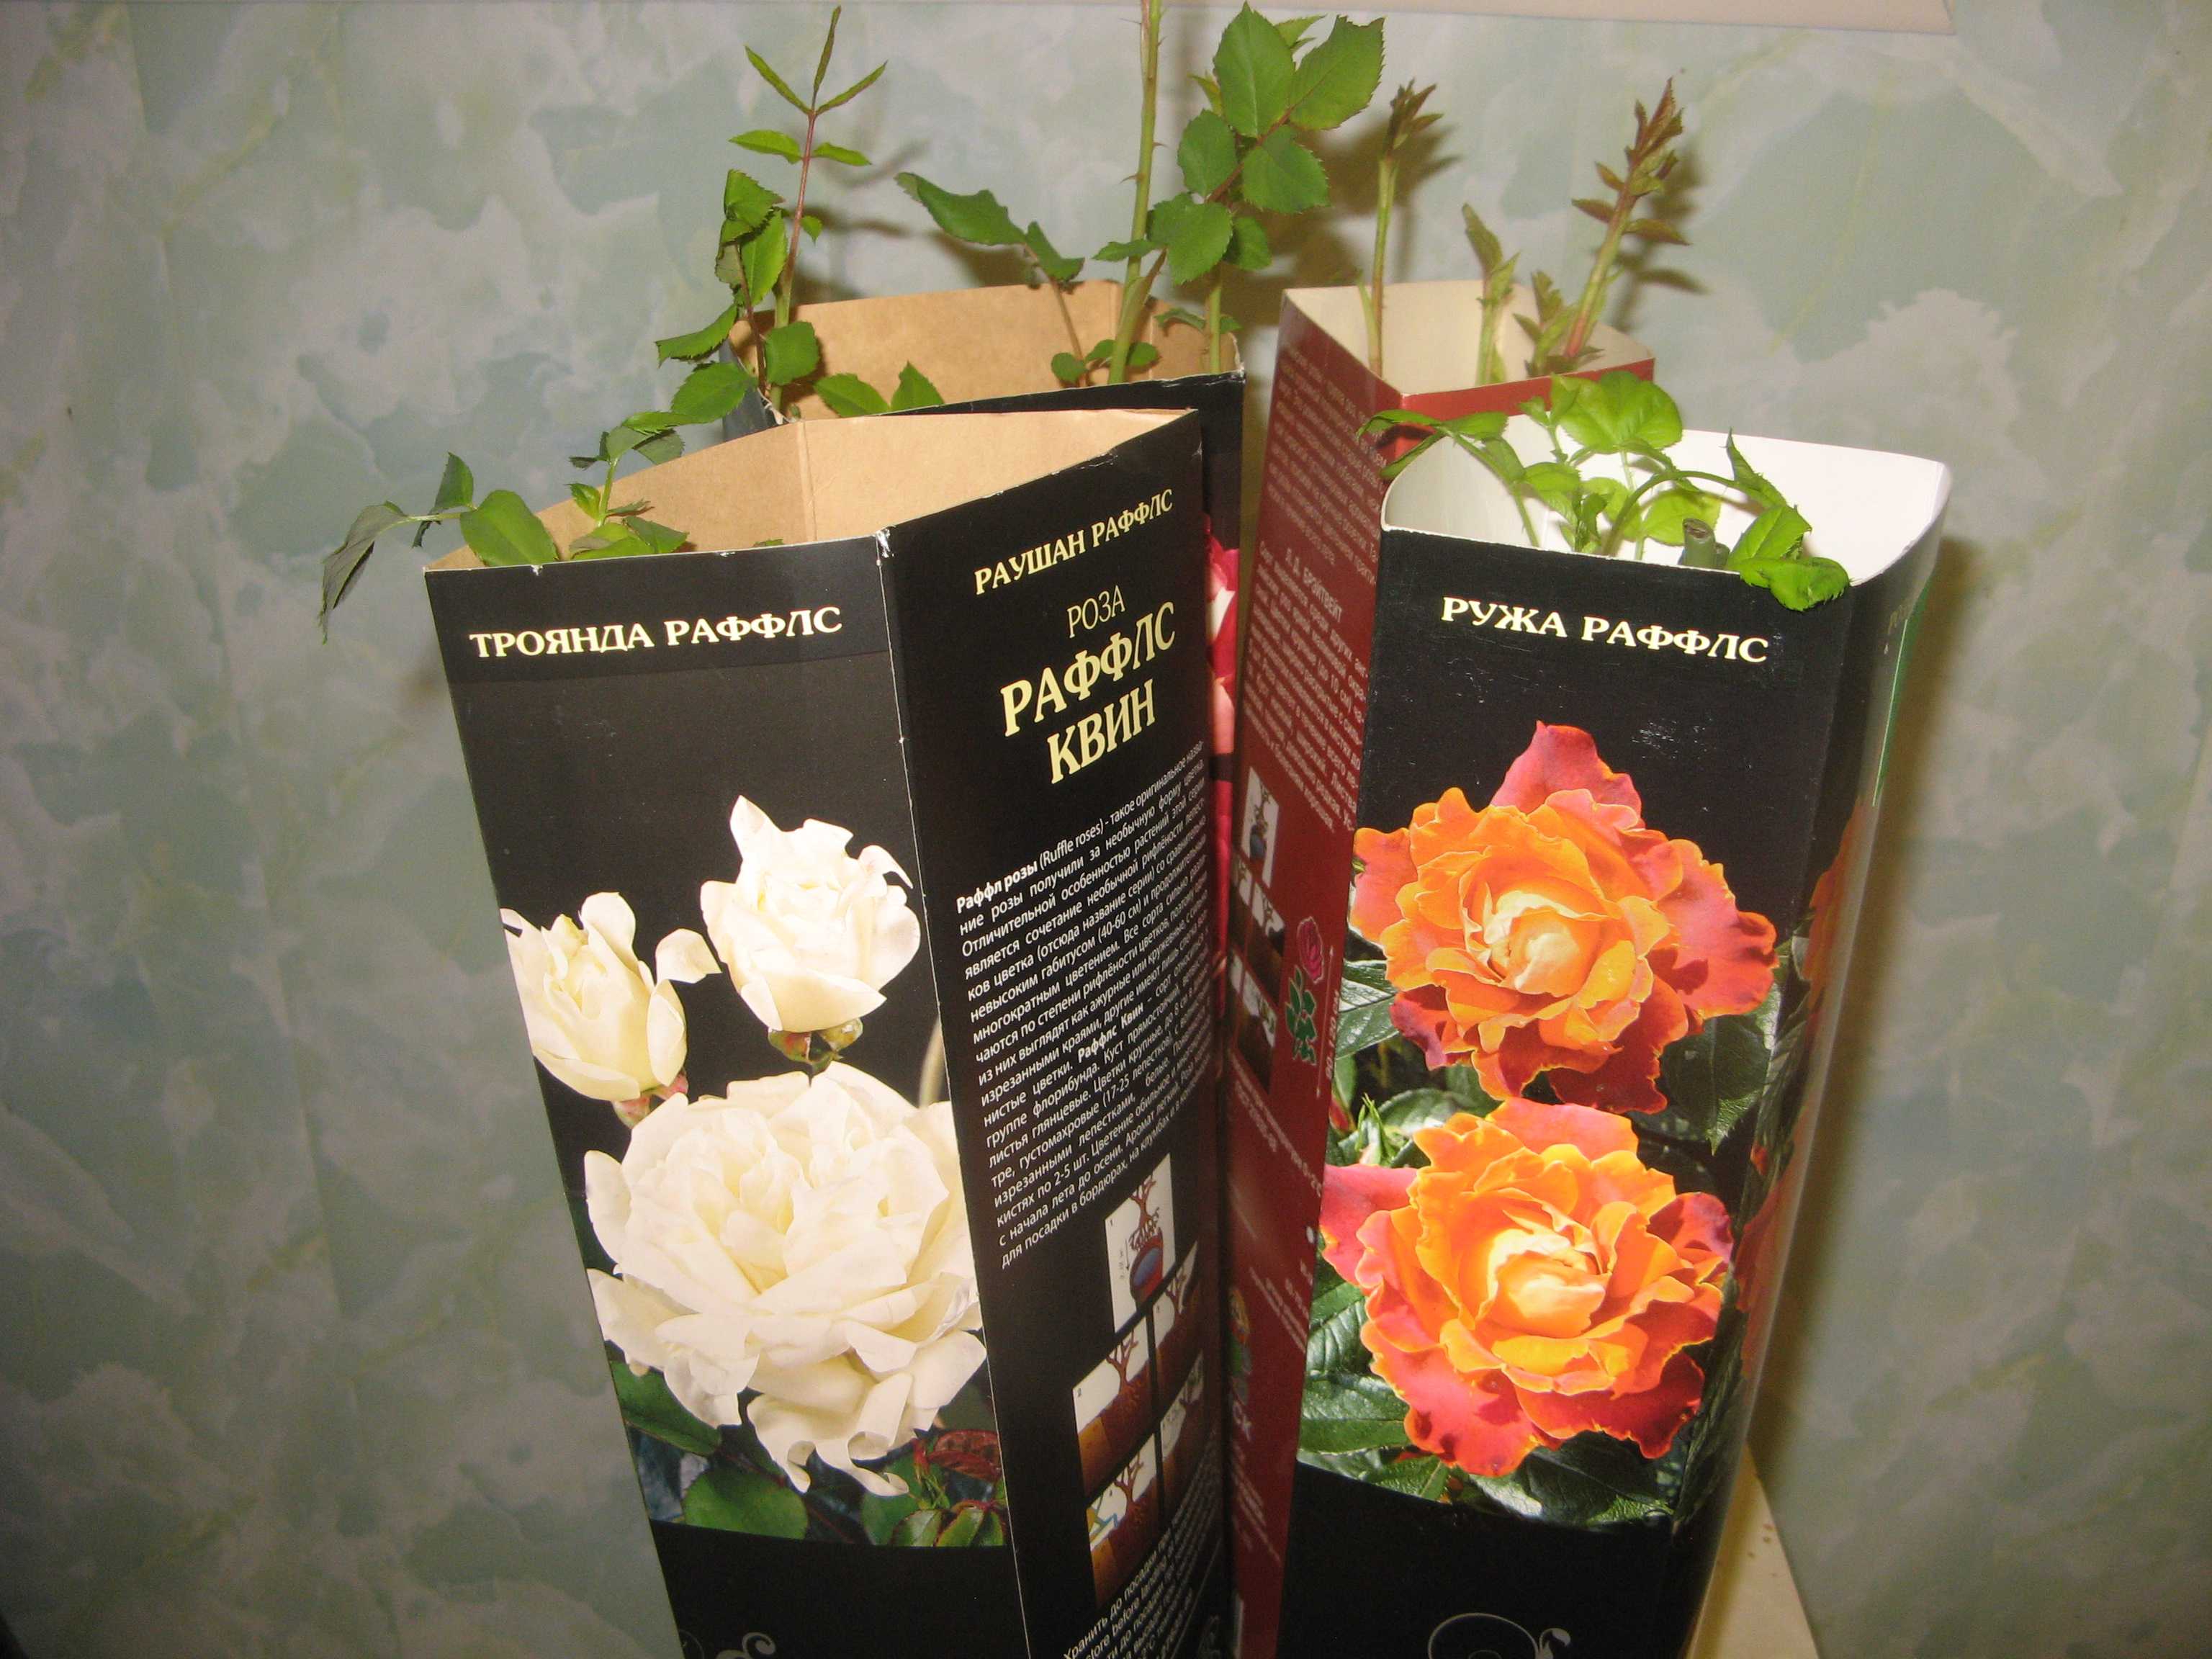 Розы саженцы доставка. Саженцы роз в коробке. Упаковка для саженцев роз. Саженцы роз в упаковке. Розы саженцы из коробки.